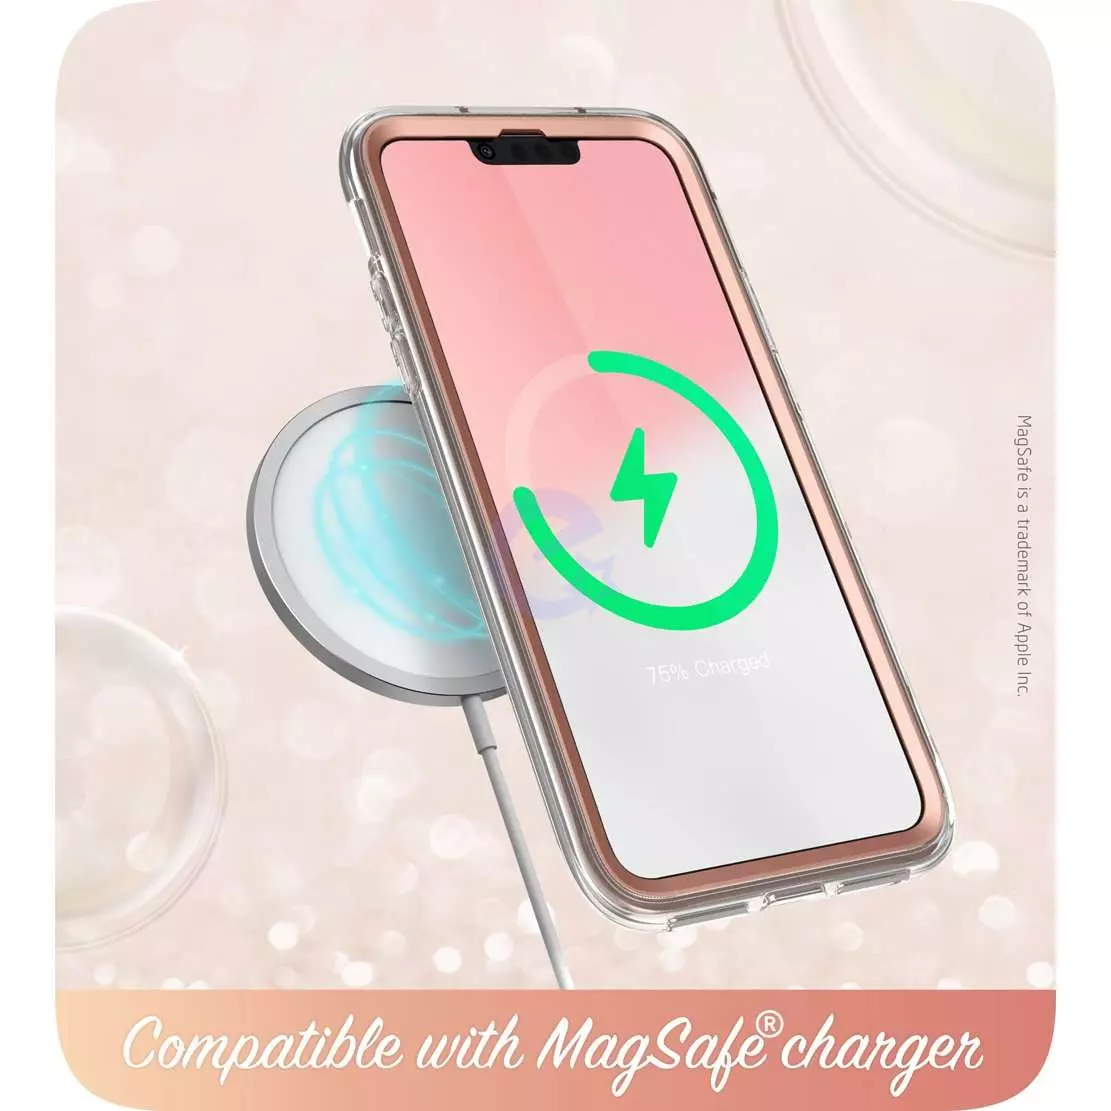 Чехол бампер для iPhone 13 Pro i-Blason Cosmo Marble Pink (Мрамор Розовый) 843439114197